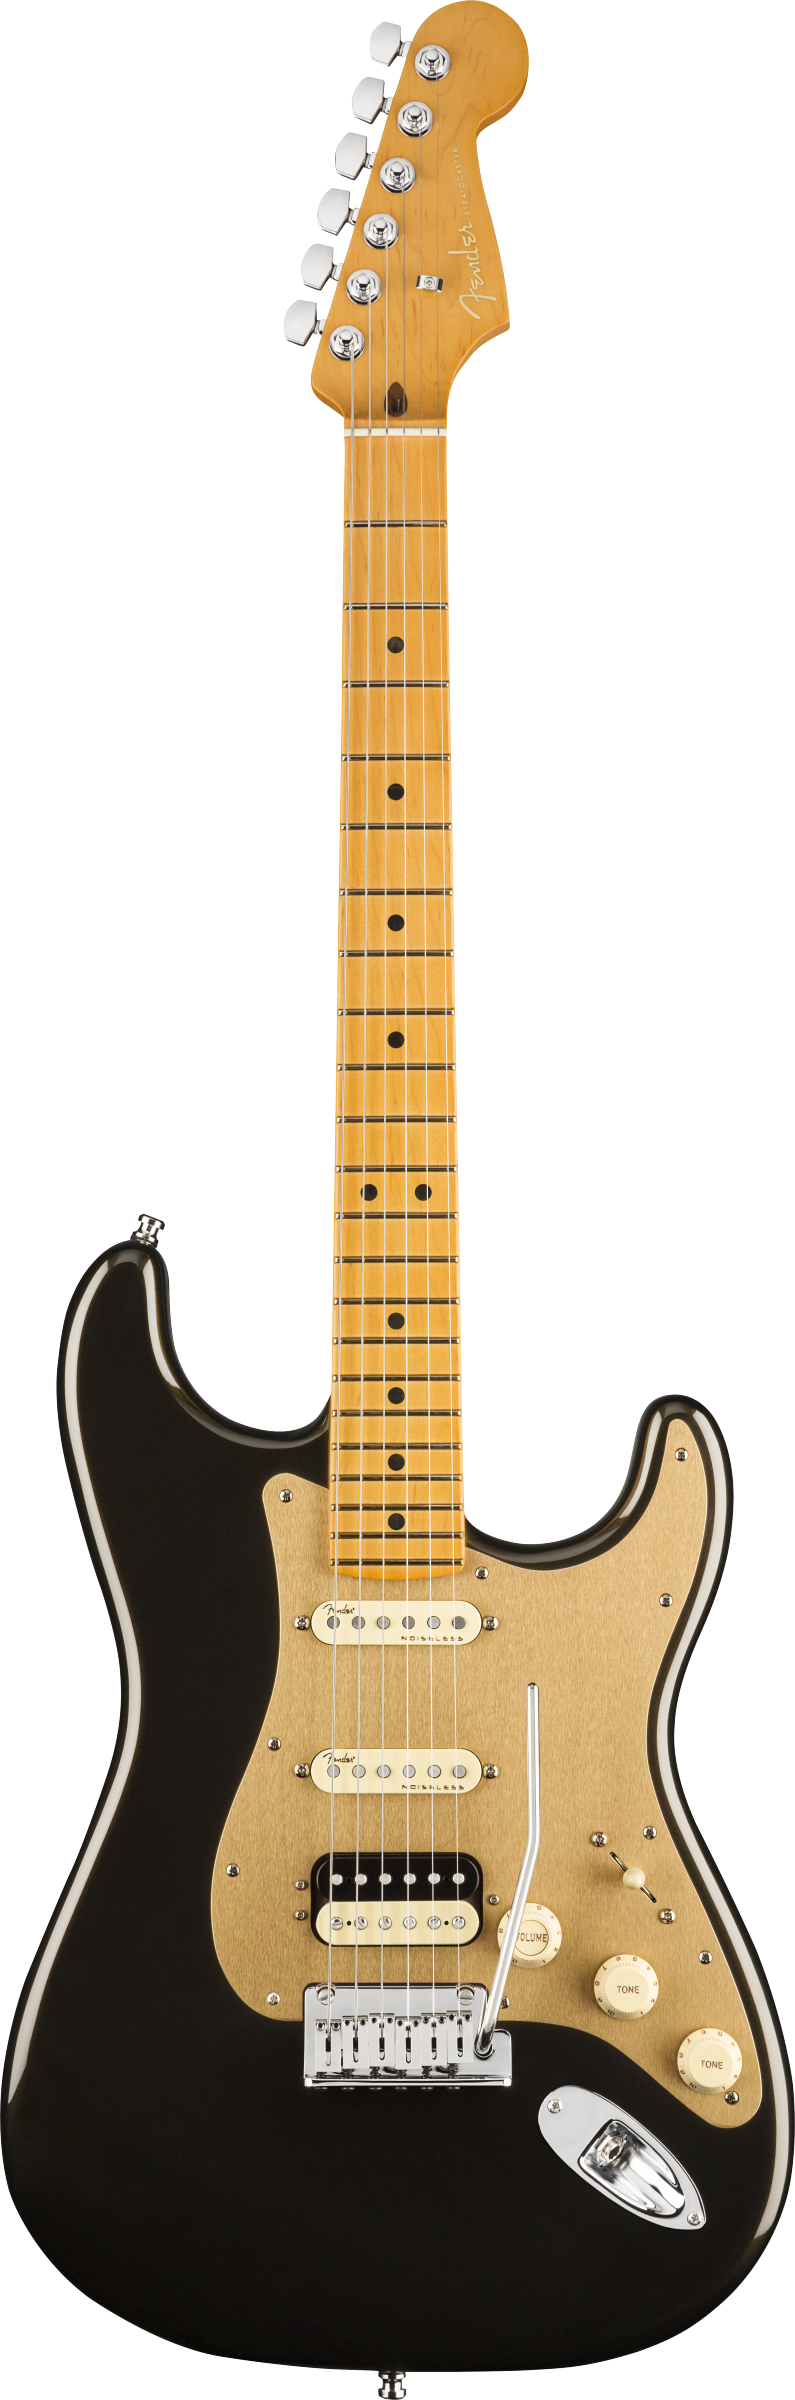 Fender Stratocaster electric guitar in Texas Tea Black Tone Shop Guitars DFW Texas